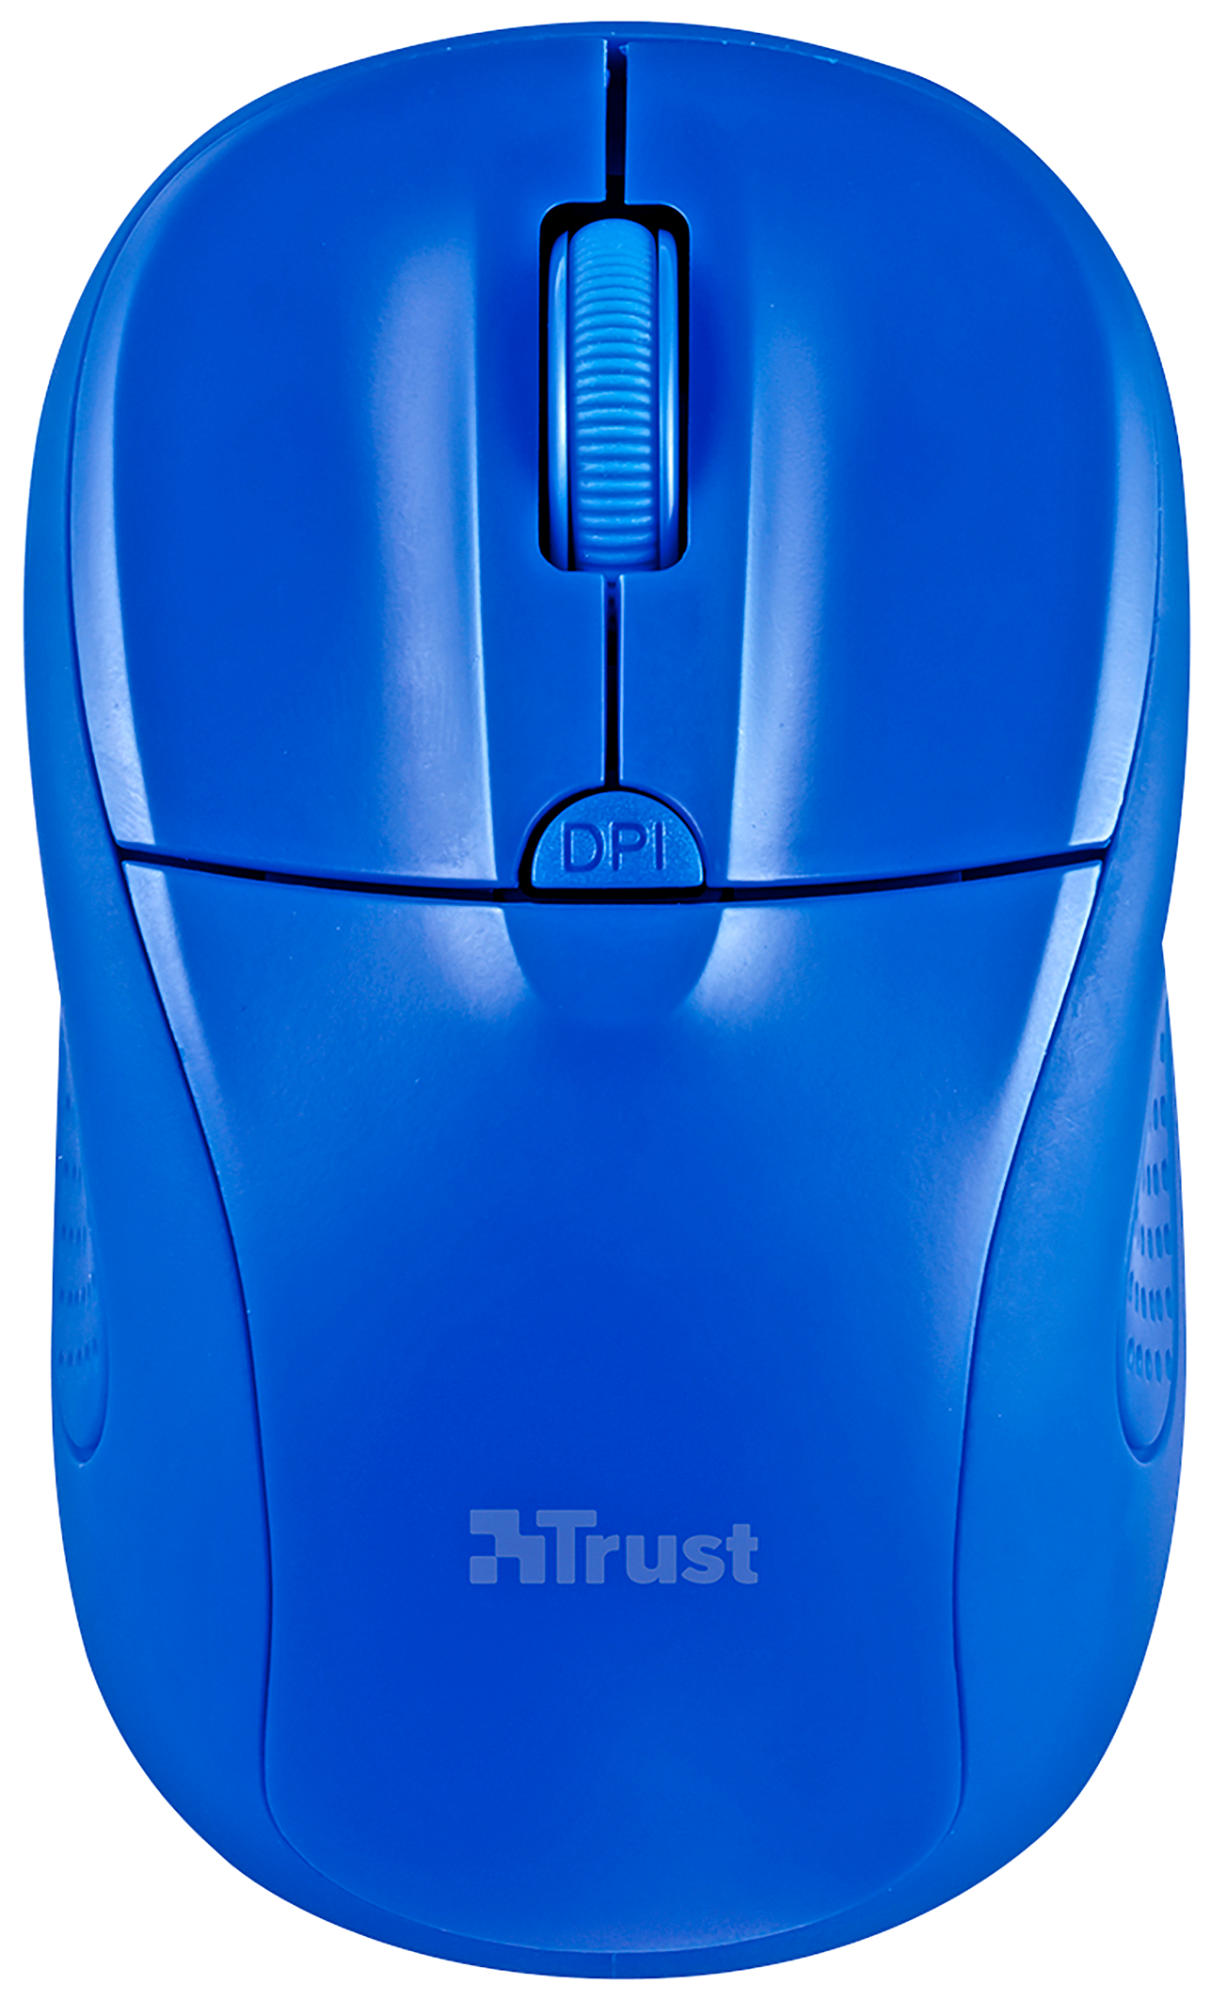 Trust Primo Blue alcance 6m 10001600 dpi micro receptor wireless azul color 20786 1600 raton 1600dpi